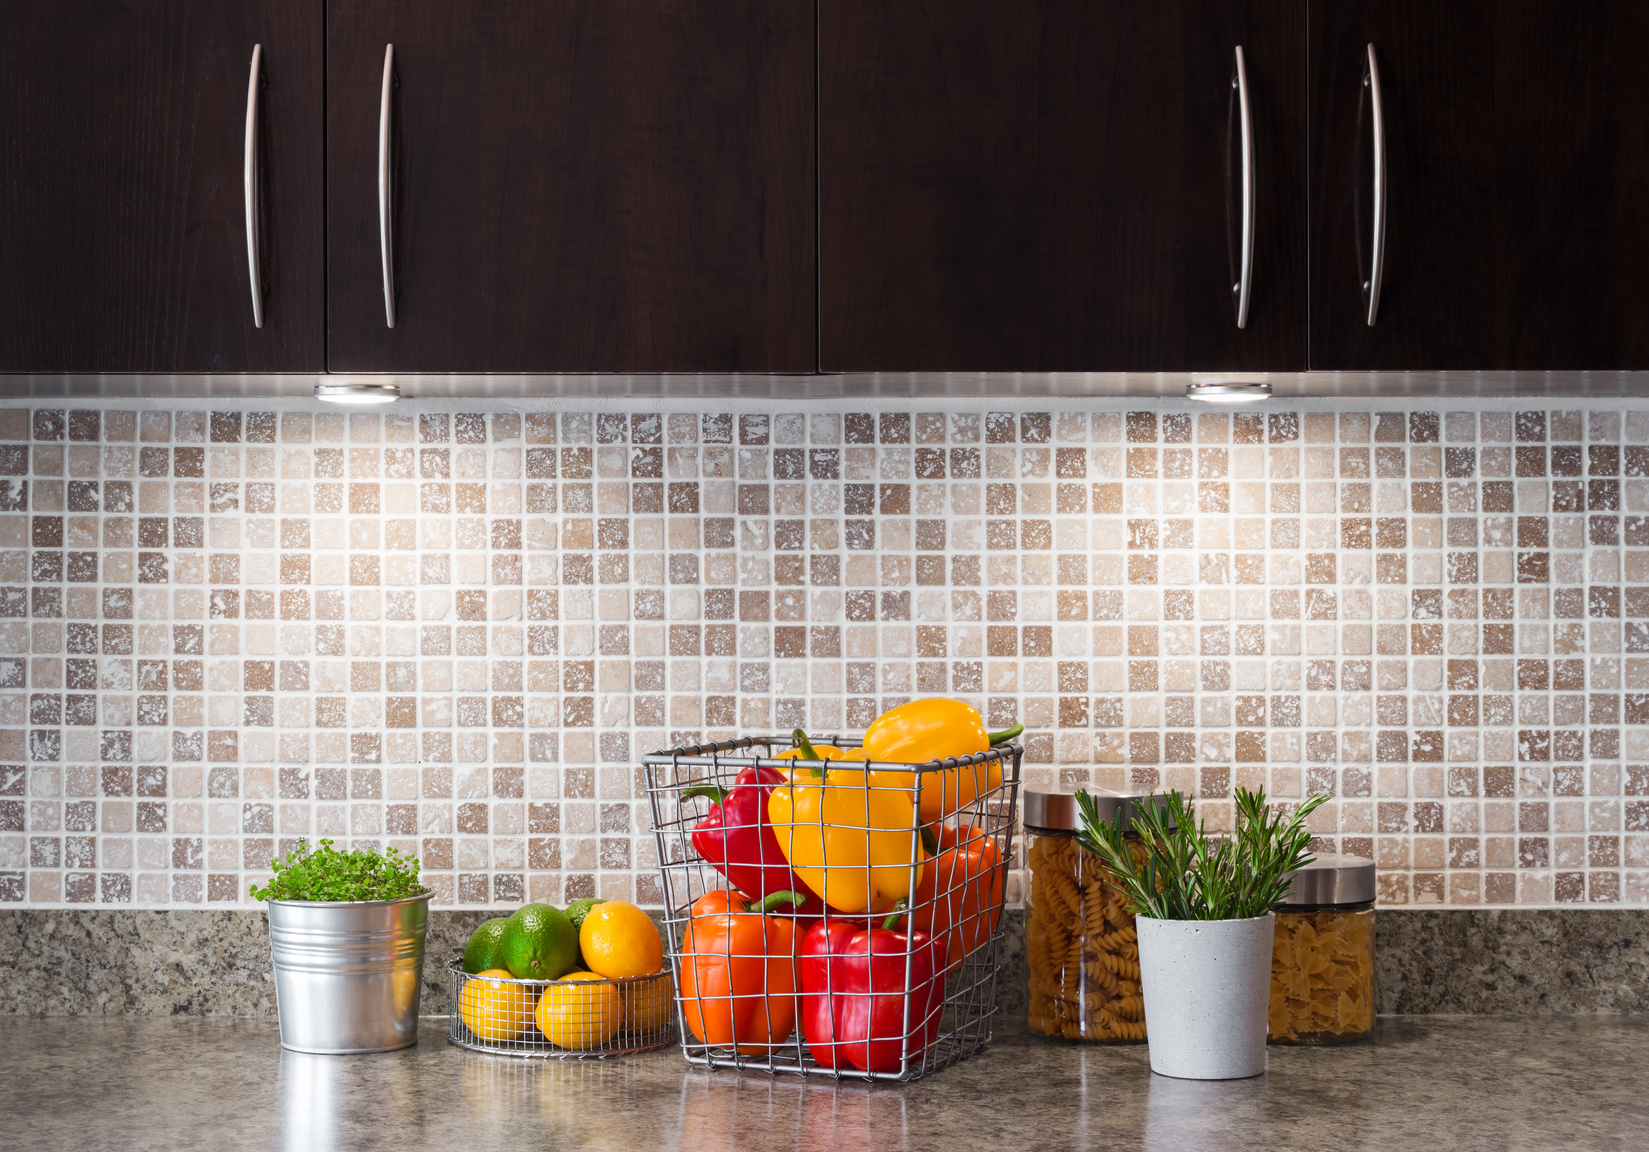 Glass Mosaic Tile Backsplash The Easy Way To Install At Home Belk Tile